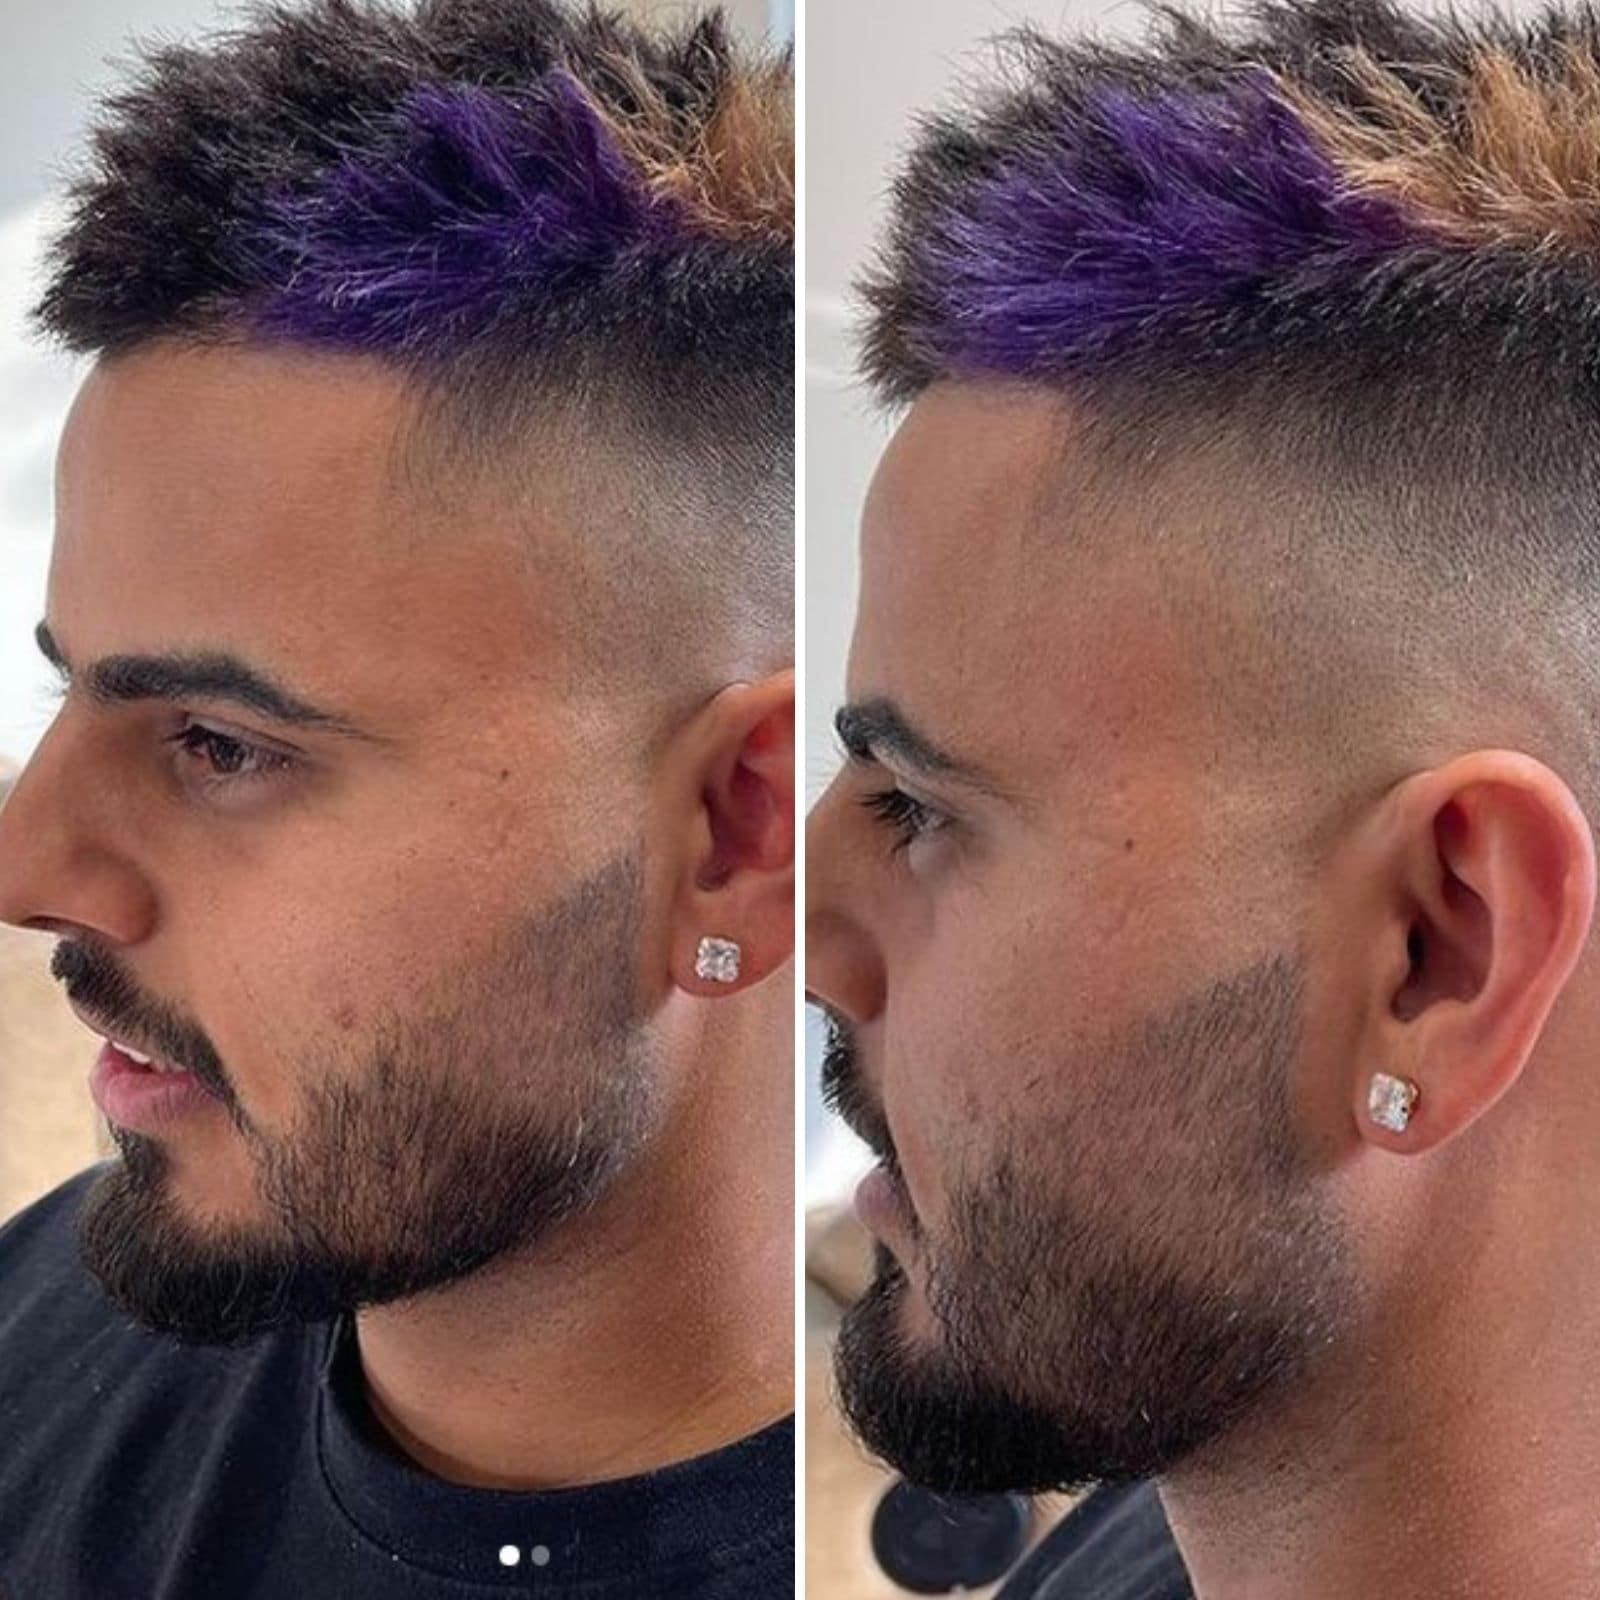 Hair Cuts Boys haircutsboys  Instagram photos and videos